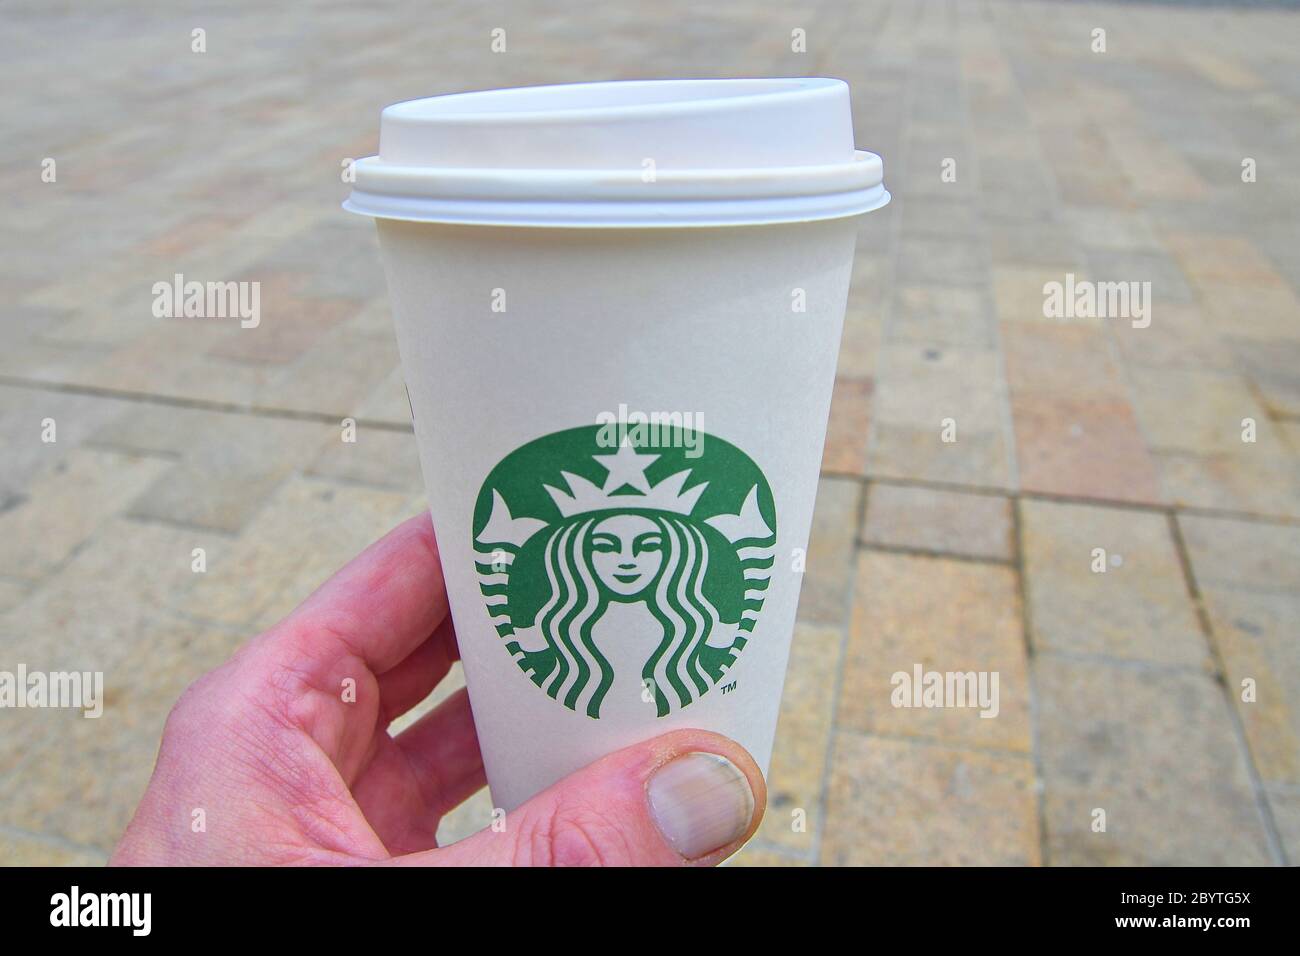 https://c8.alamy.com/comp/2BYTG5X/bratislava-slovakia-june-8-2020-an-unidentified-man-hand-holding-a-cup-of-beverage-from-starbucks-cafe-2BYTG5X.jpg